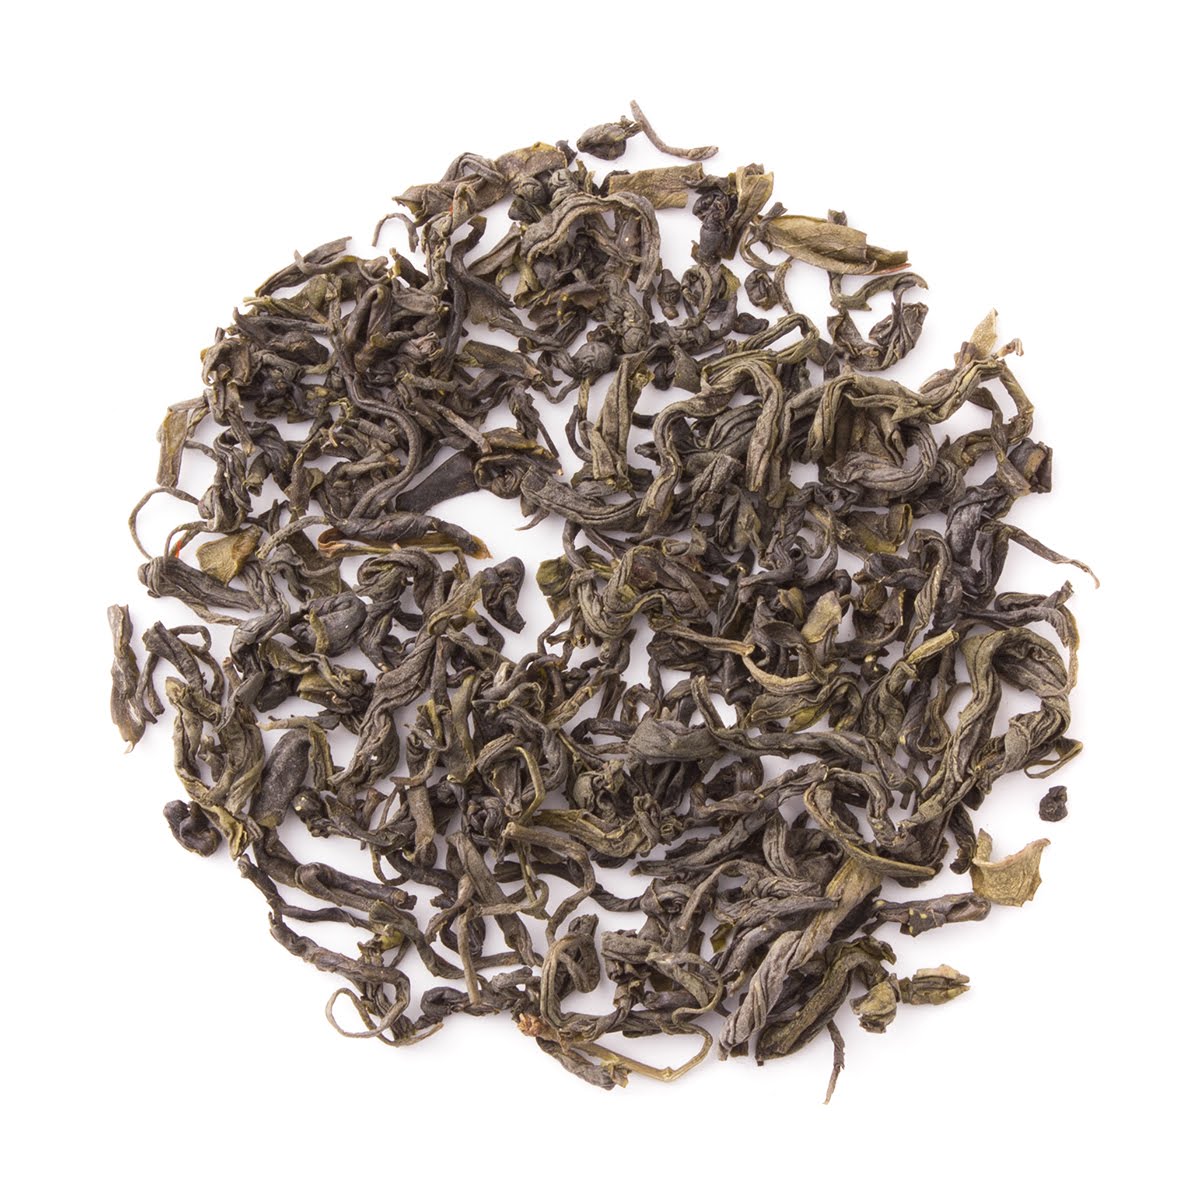 Organic Chun Mee - Premium Loose Leaf Green Tea - USDA Organic - OU Kosher - Heavenly Tea Leaves